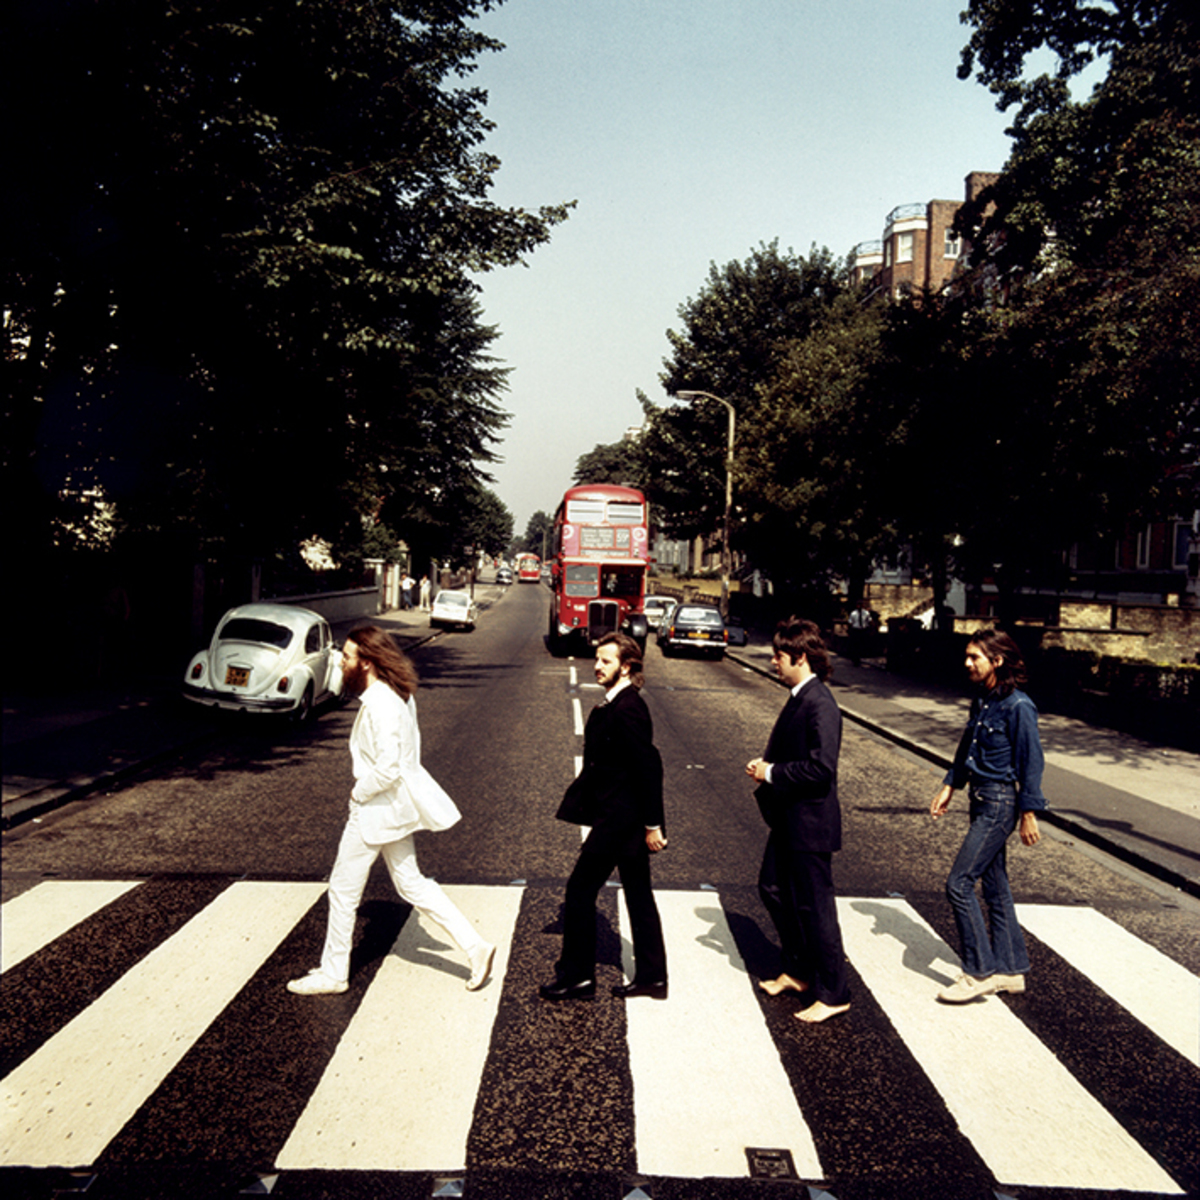 The Beatles - The Abbey Road Set "Frame 4" by Iain Macmillan